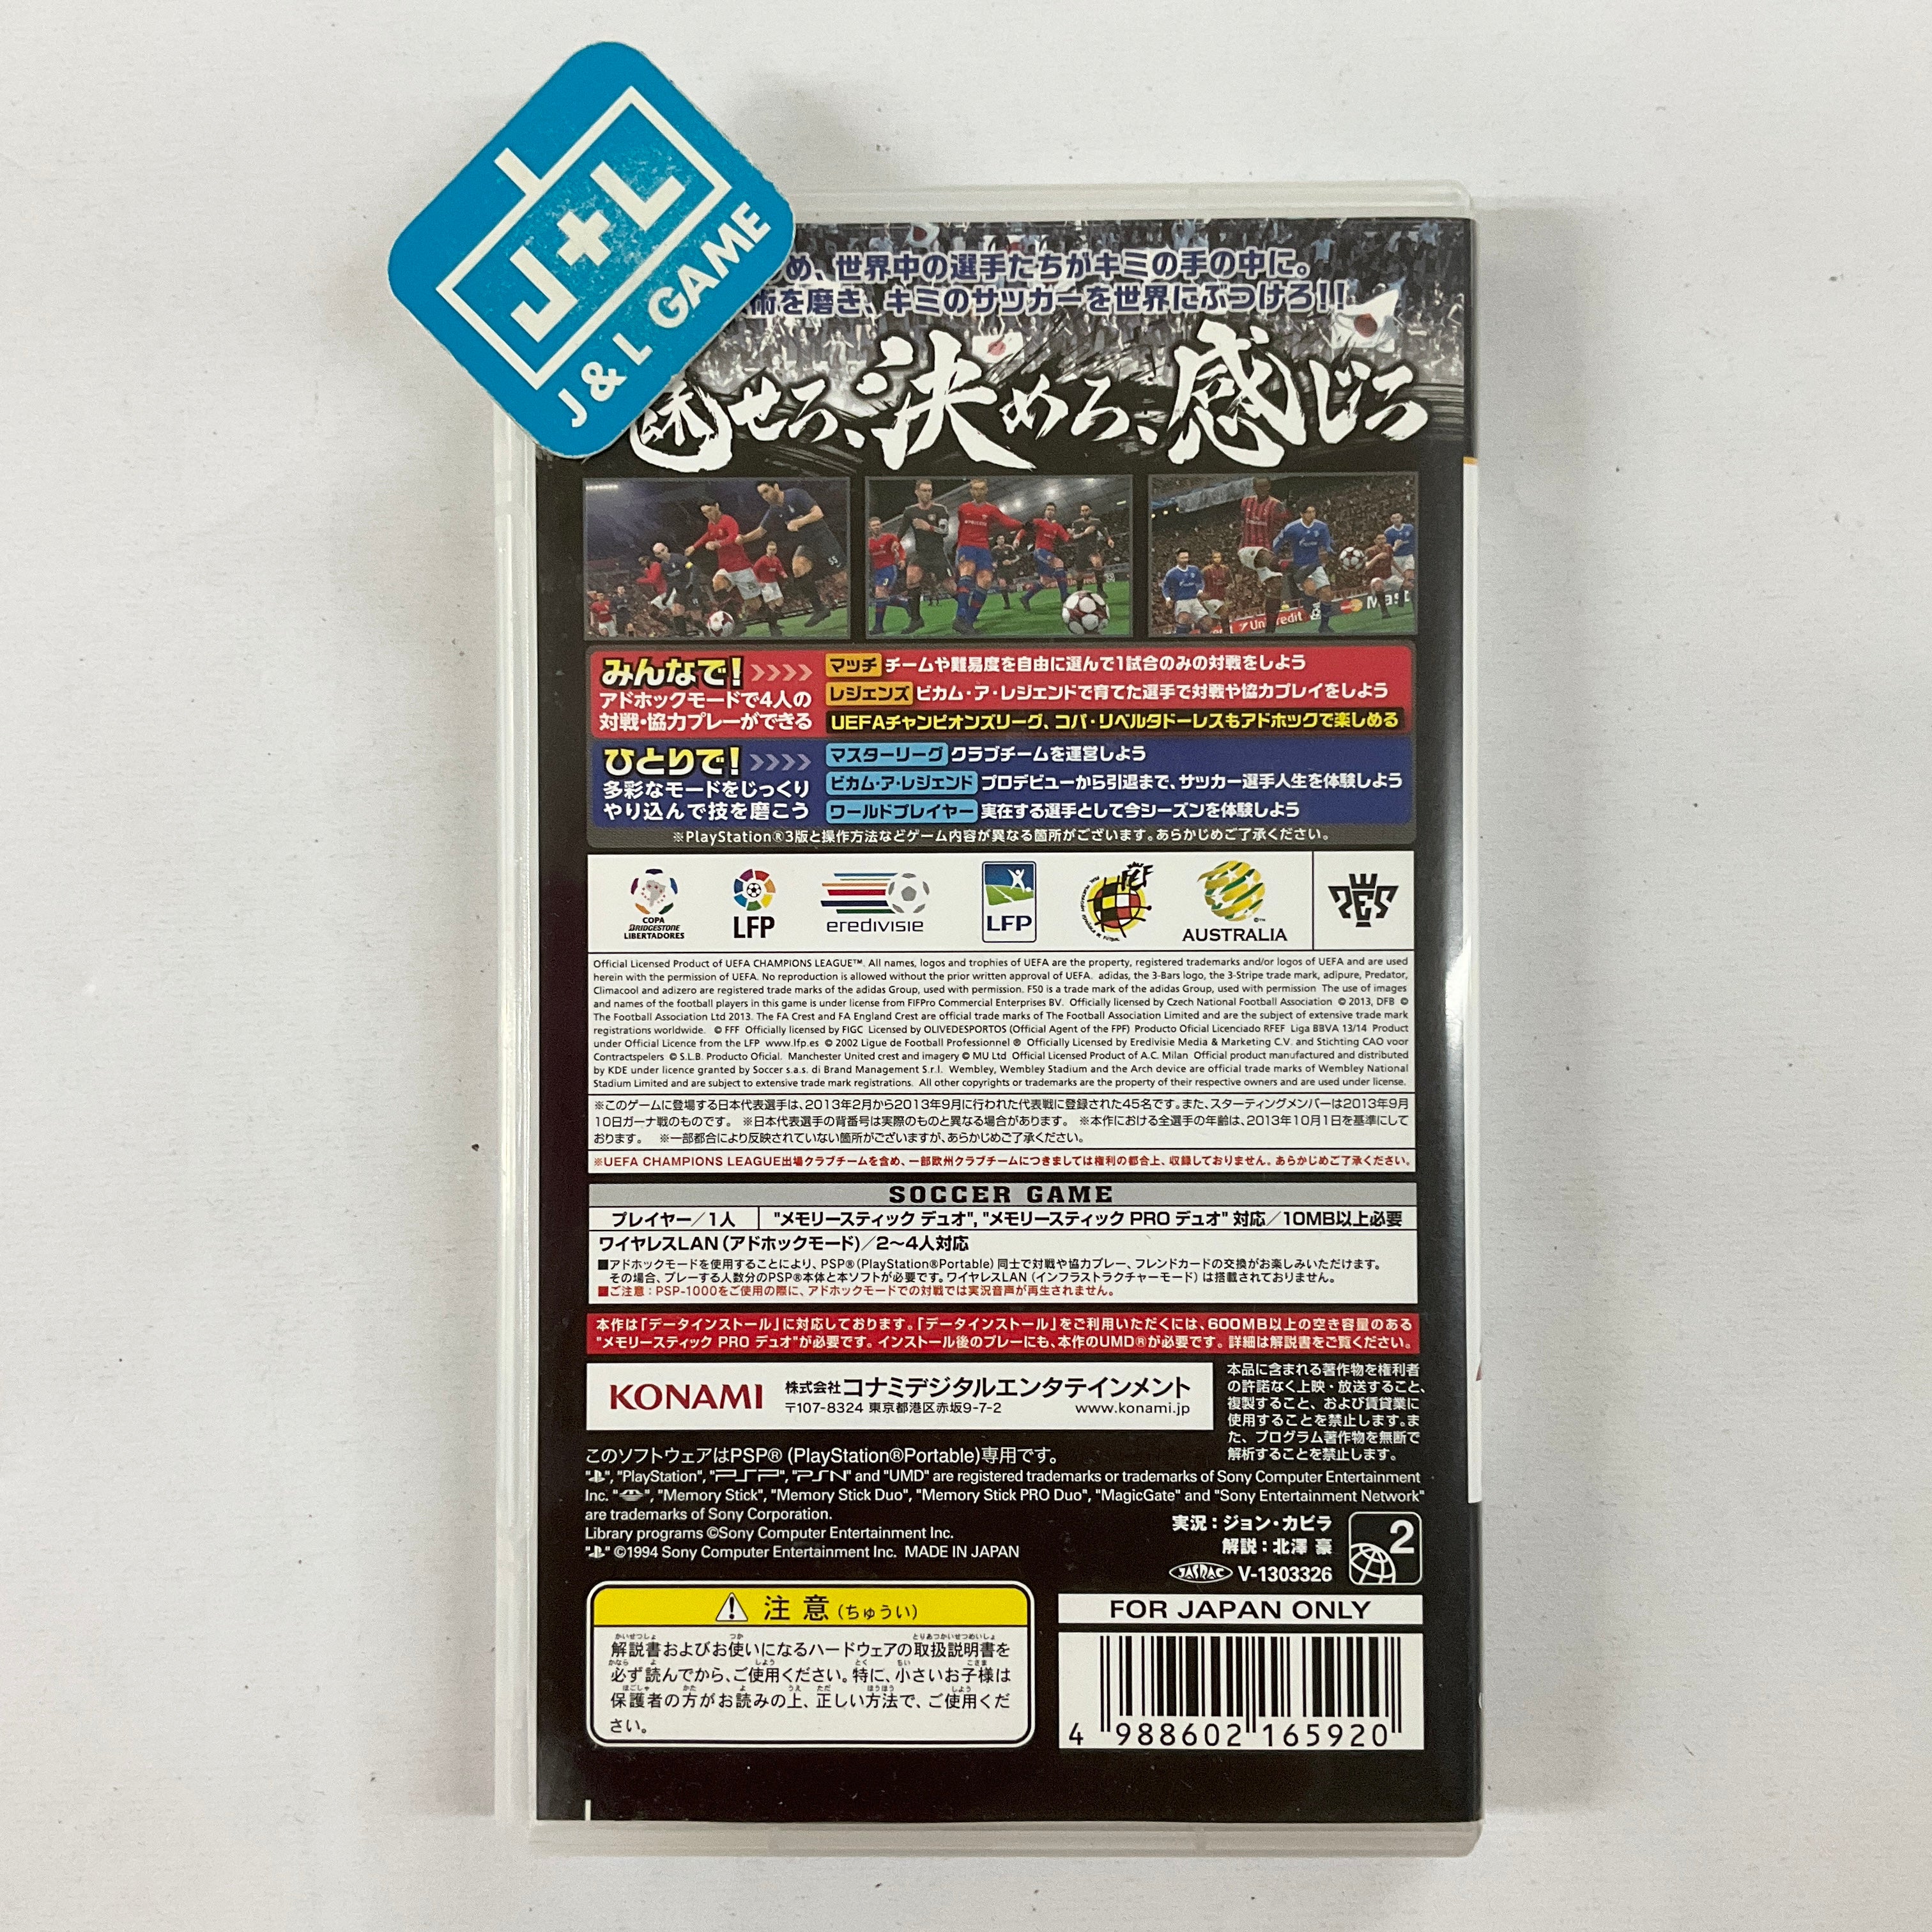 World Soccer Winning Eleven 2014 - Sony PSP [Pre-Owned] (Japanese Import) Video Games Konami   